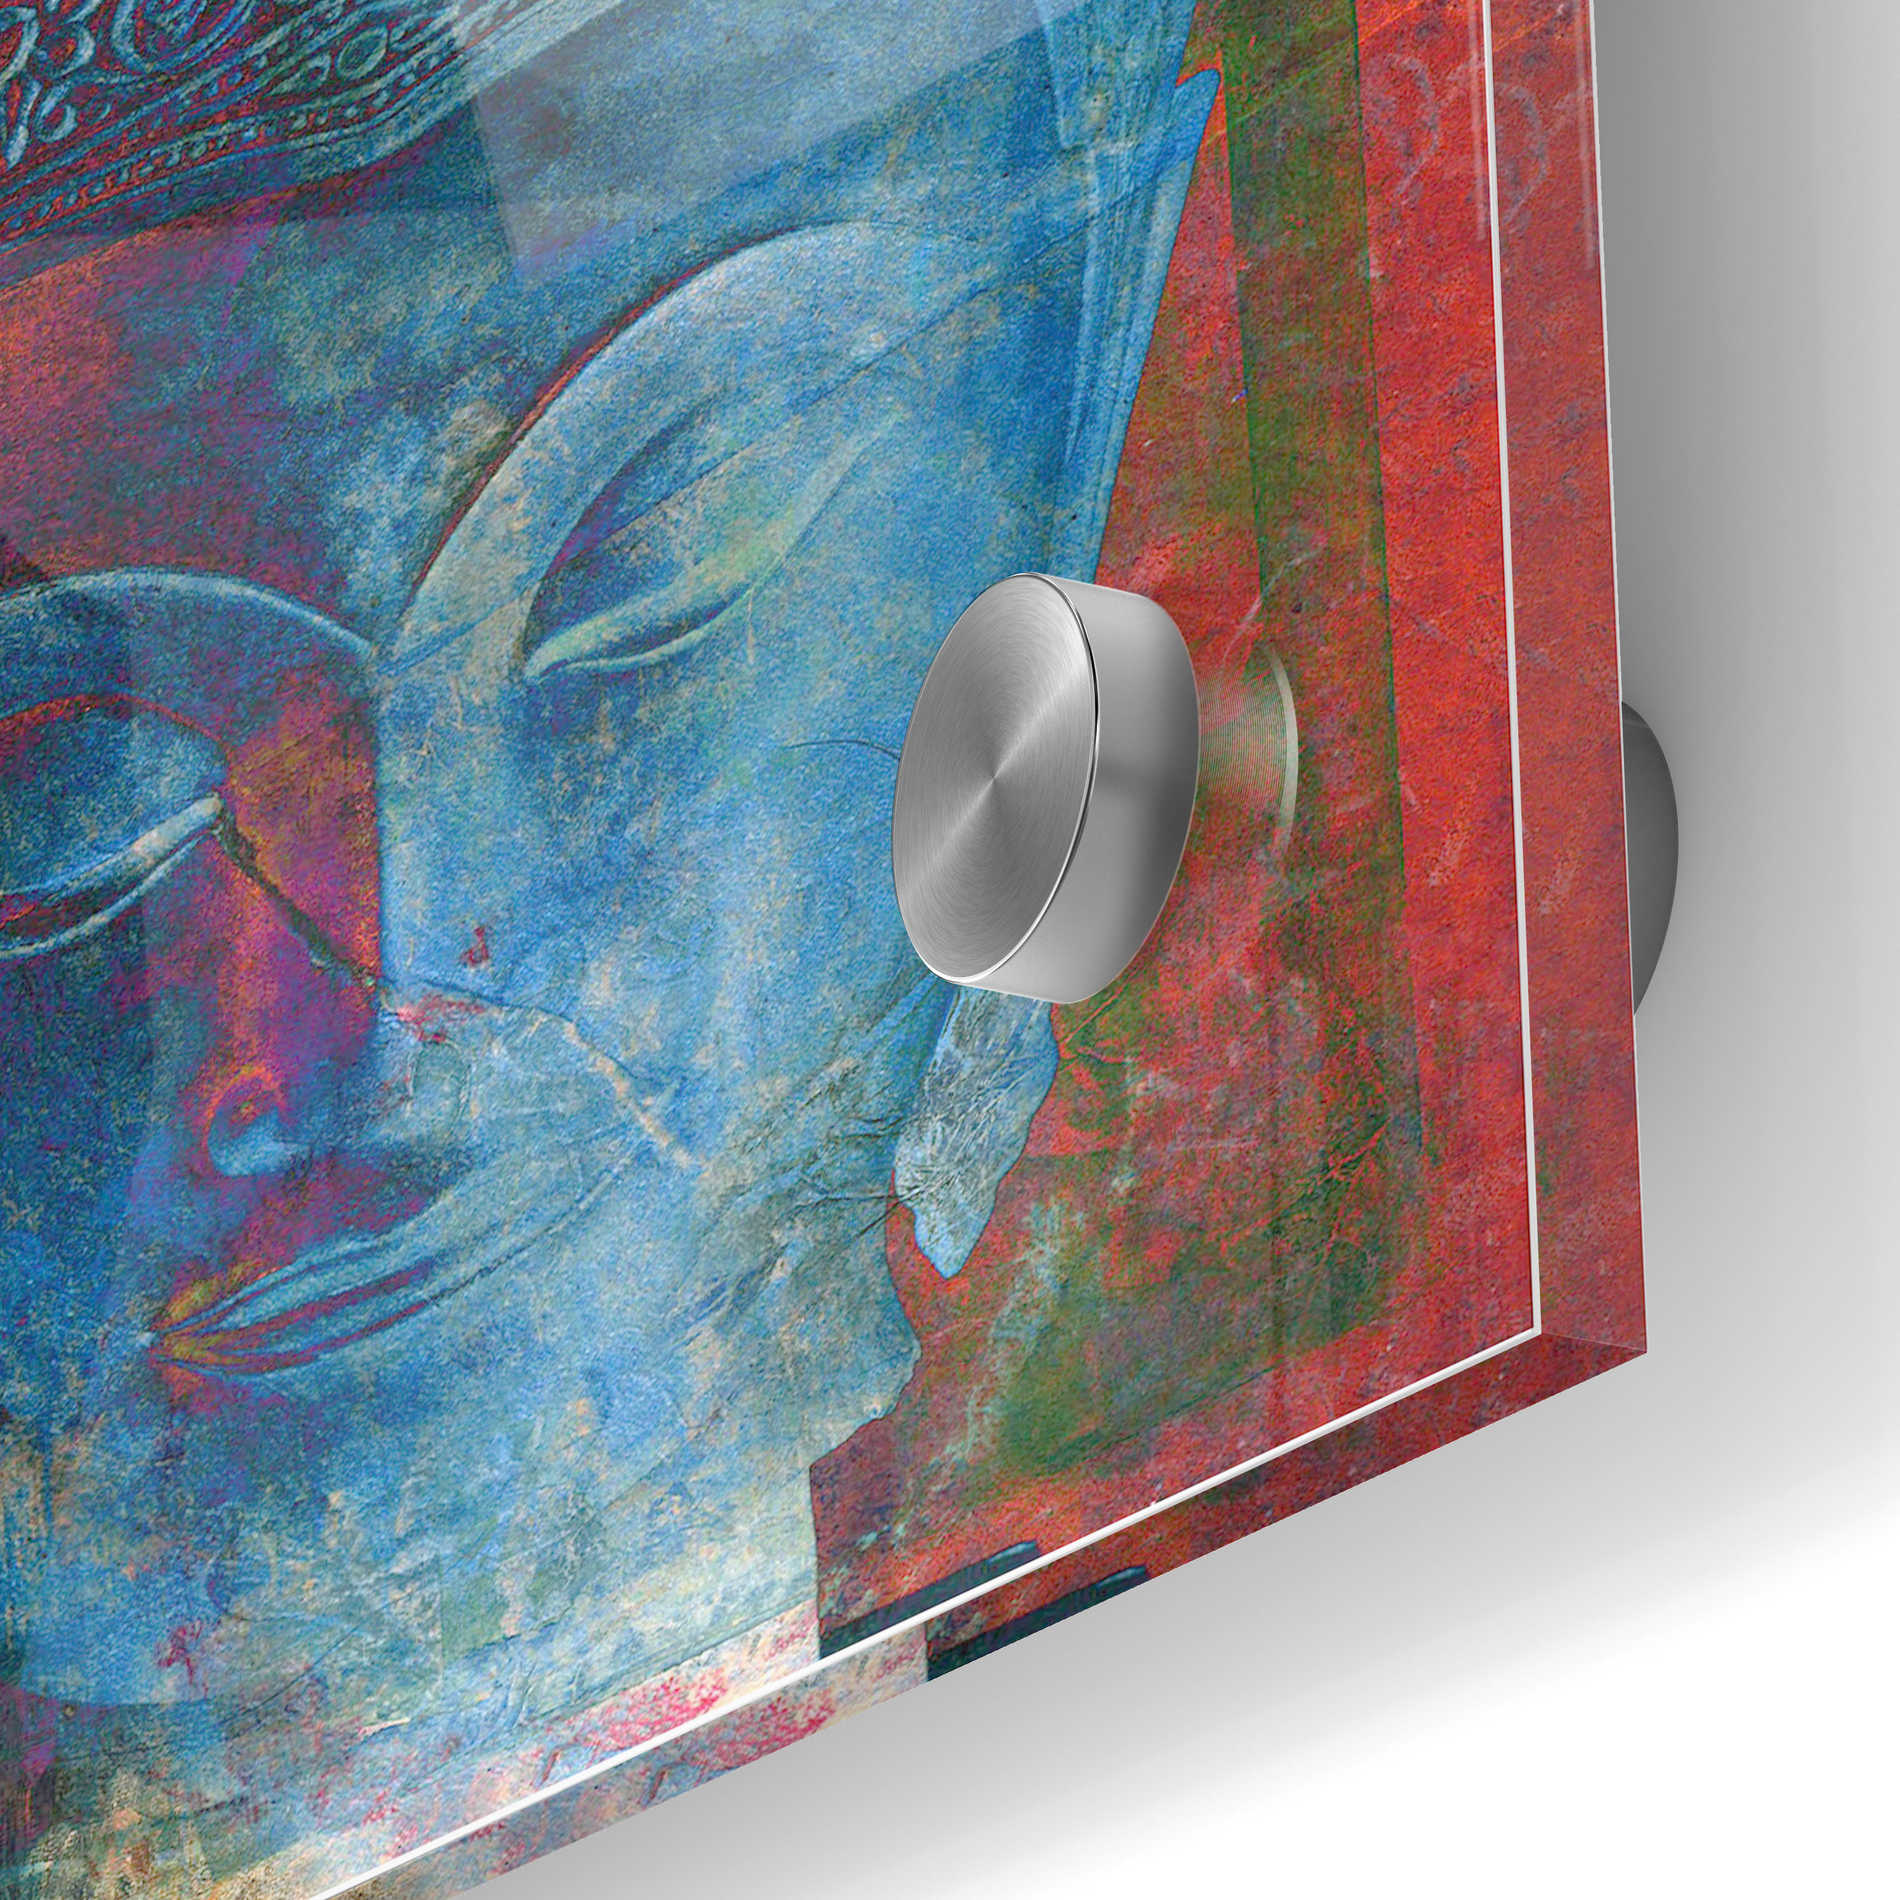 Epic Art 'Blue Buddha Head' by Elena Ray Acrylic Glass Wall Art,24x36